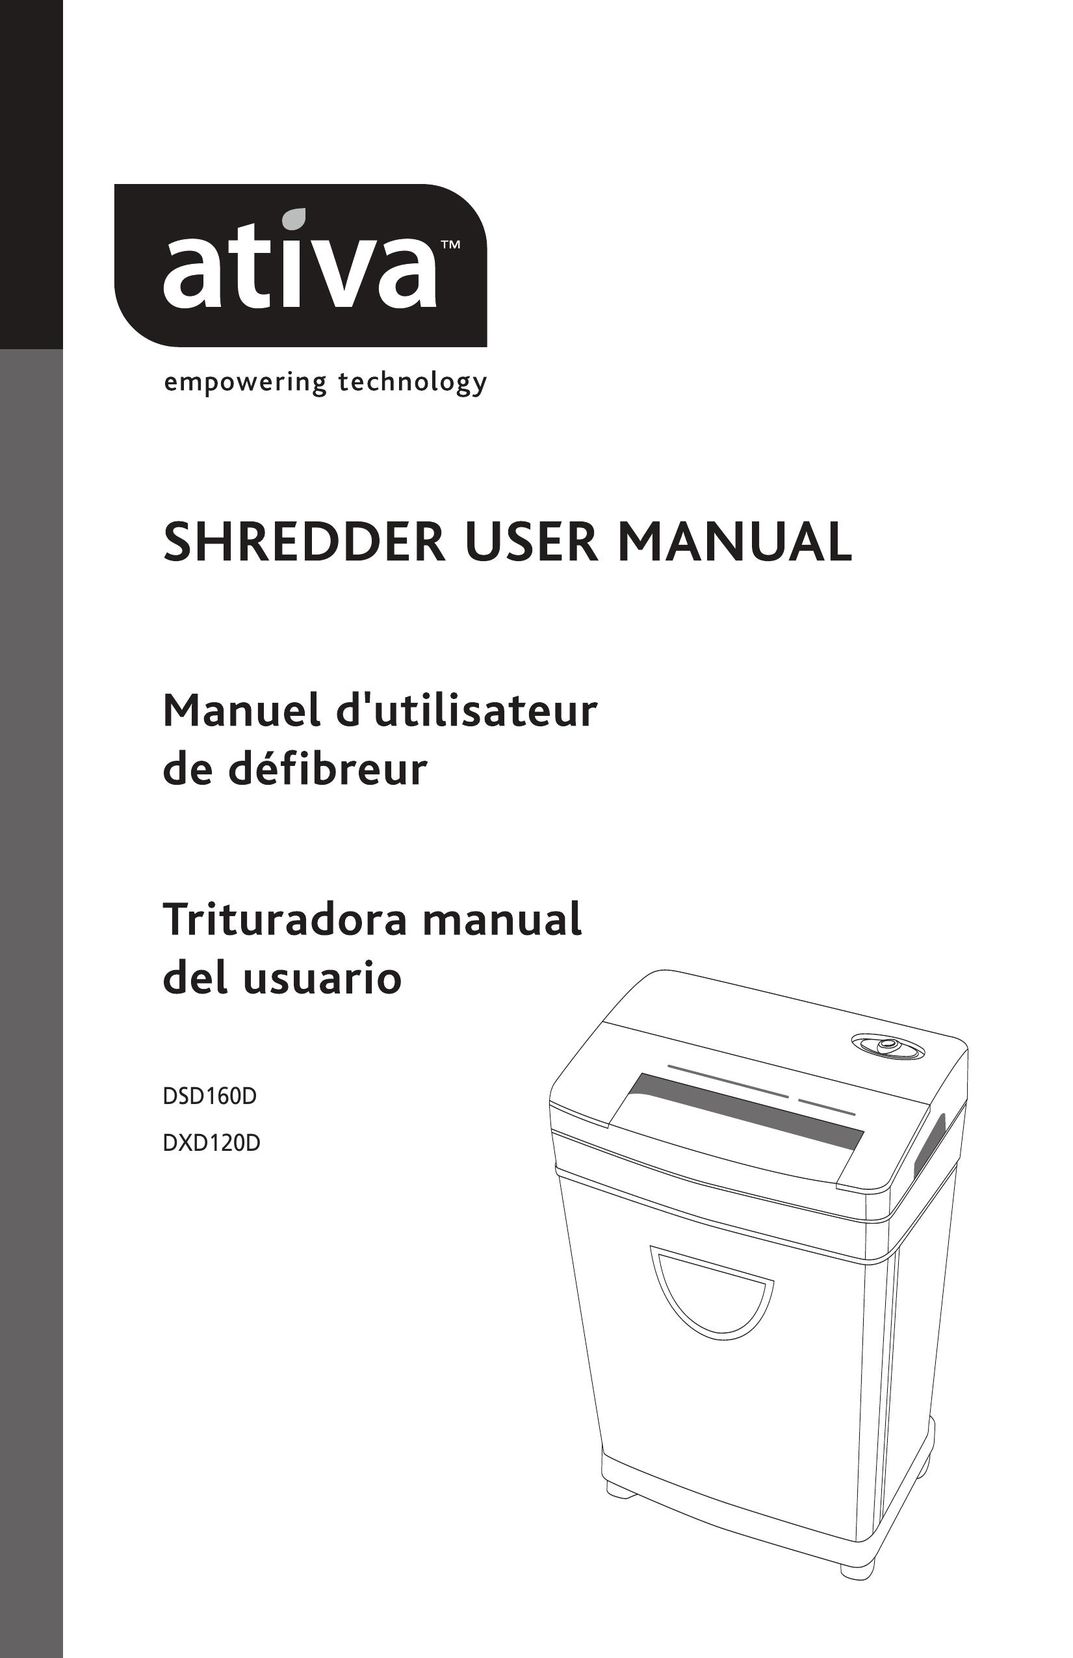 Ativa DSD160D Paper Shredder User Manual